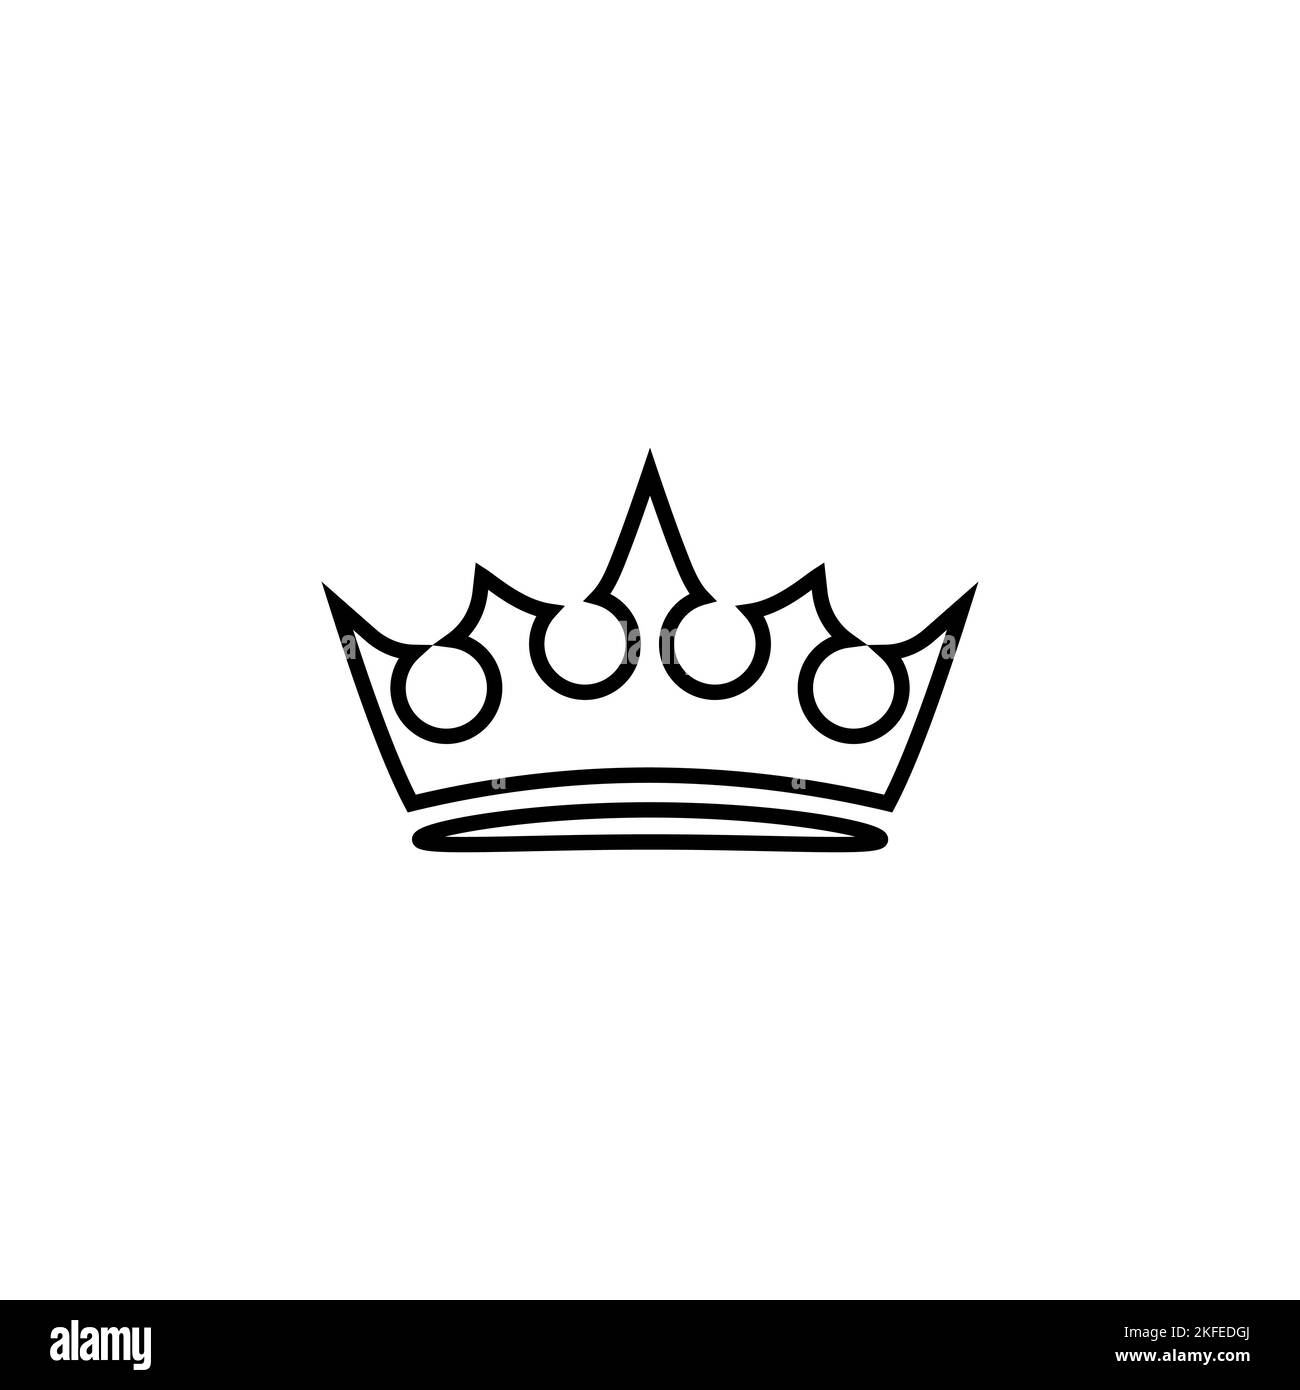 Black monarch tiara icon. Sketch heraldic diadem of royalty and power Stock Vector